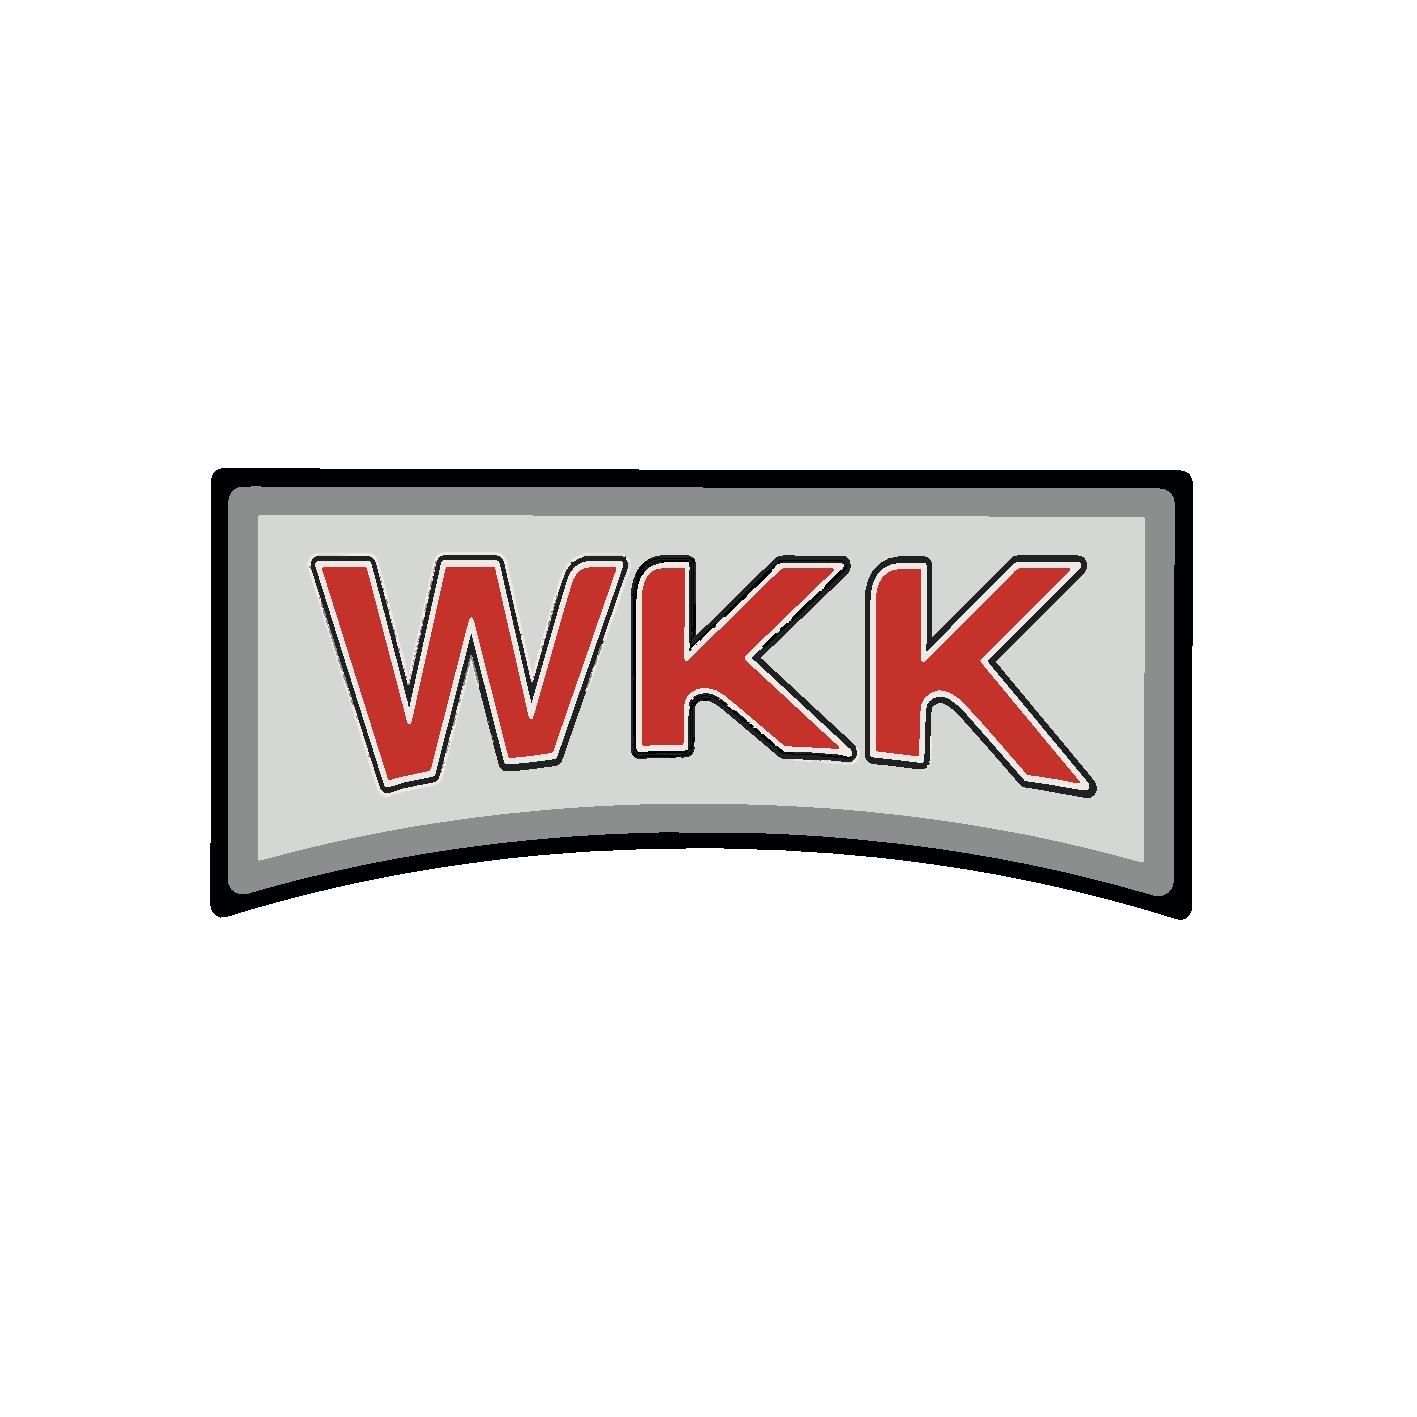 wkk logo page 001 - Start